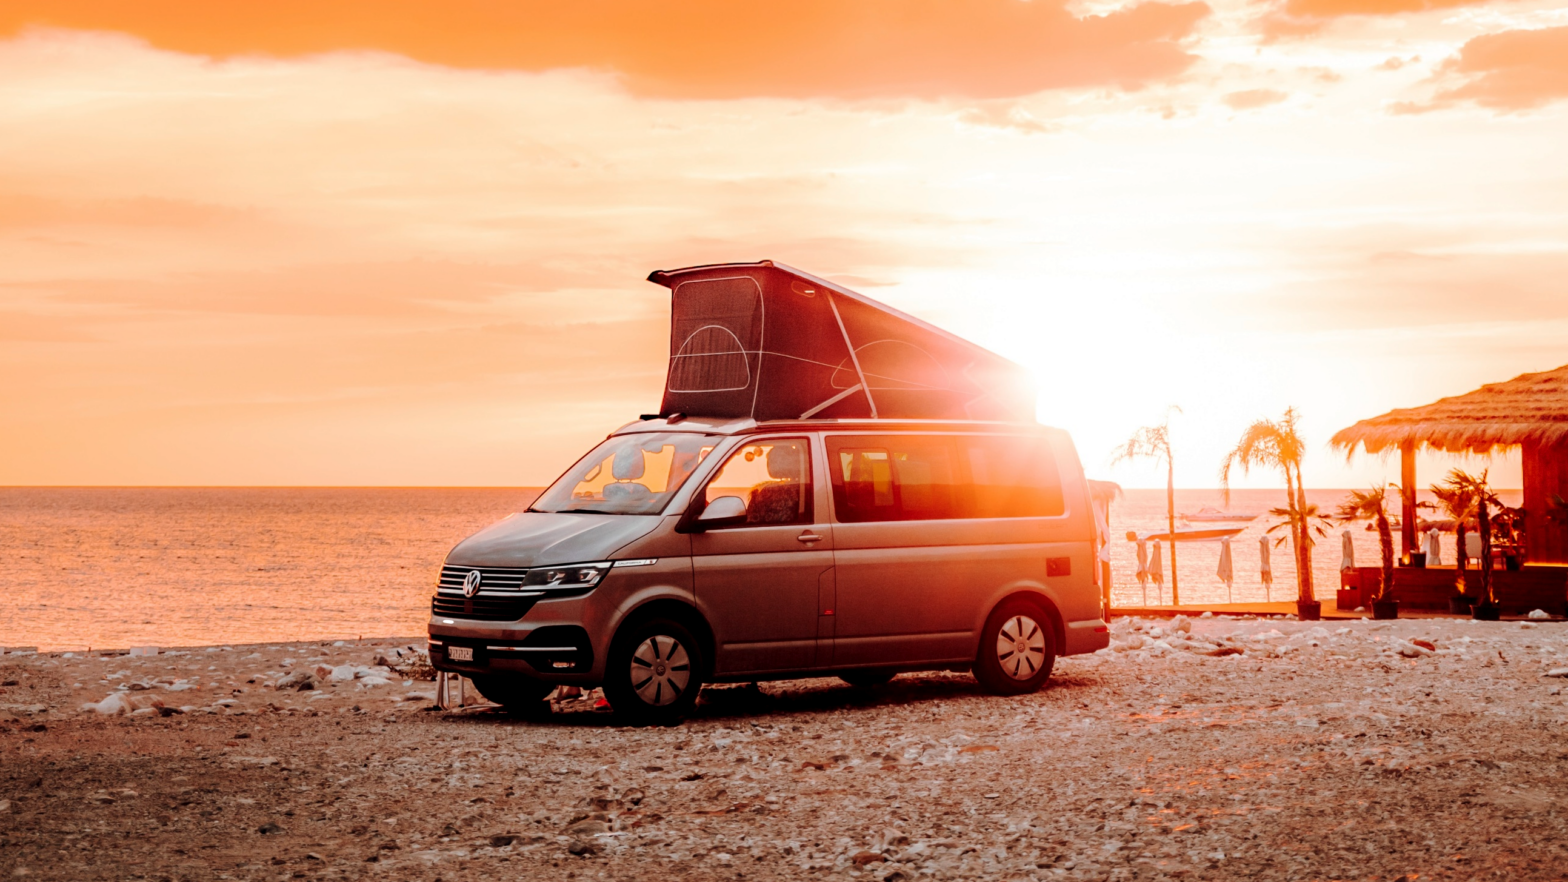 Get a Superior Heat Shield for your Camper Van